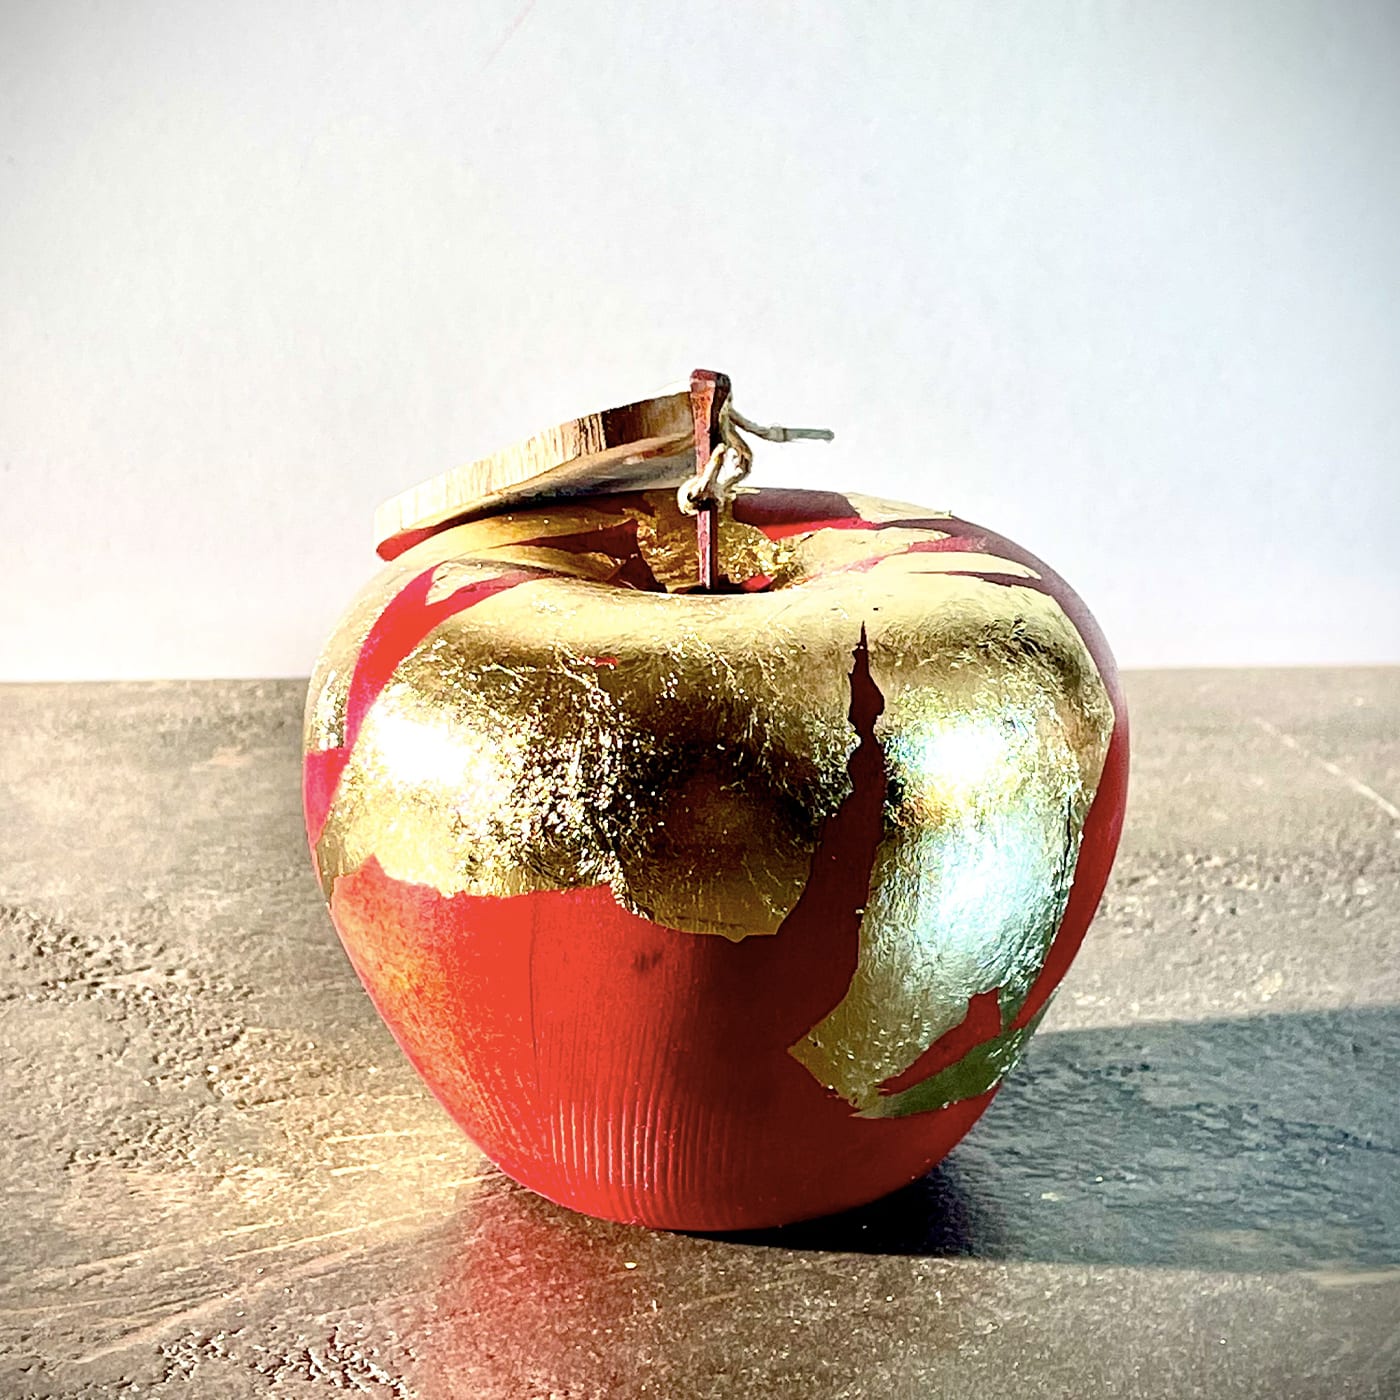 rotten gold apple